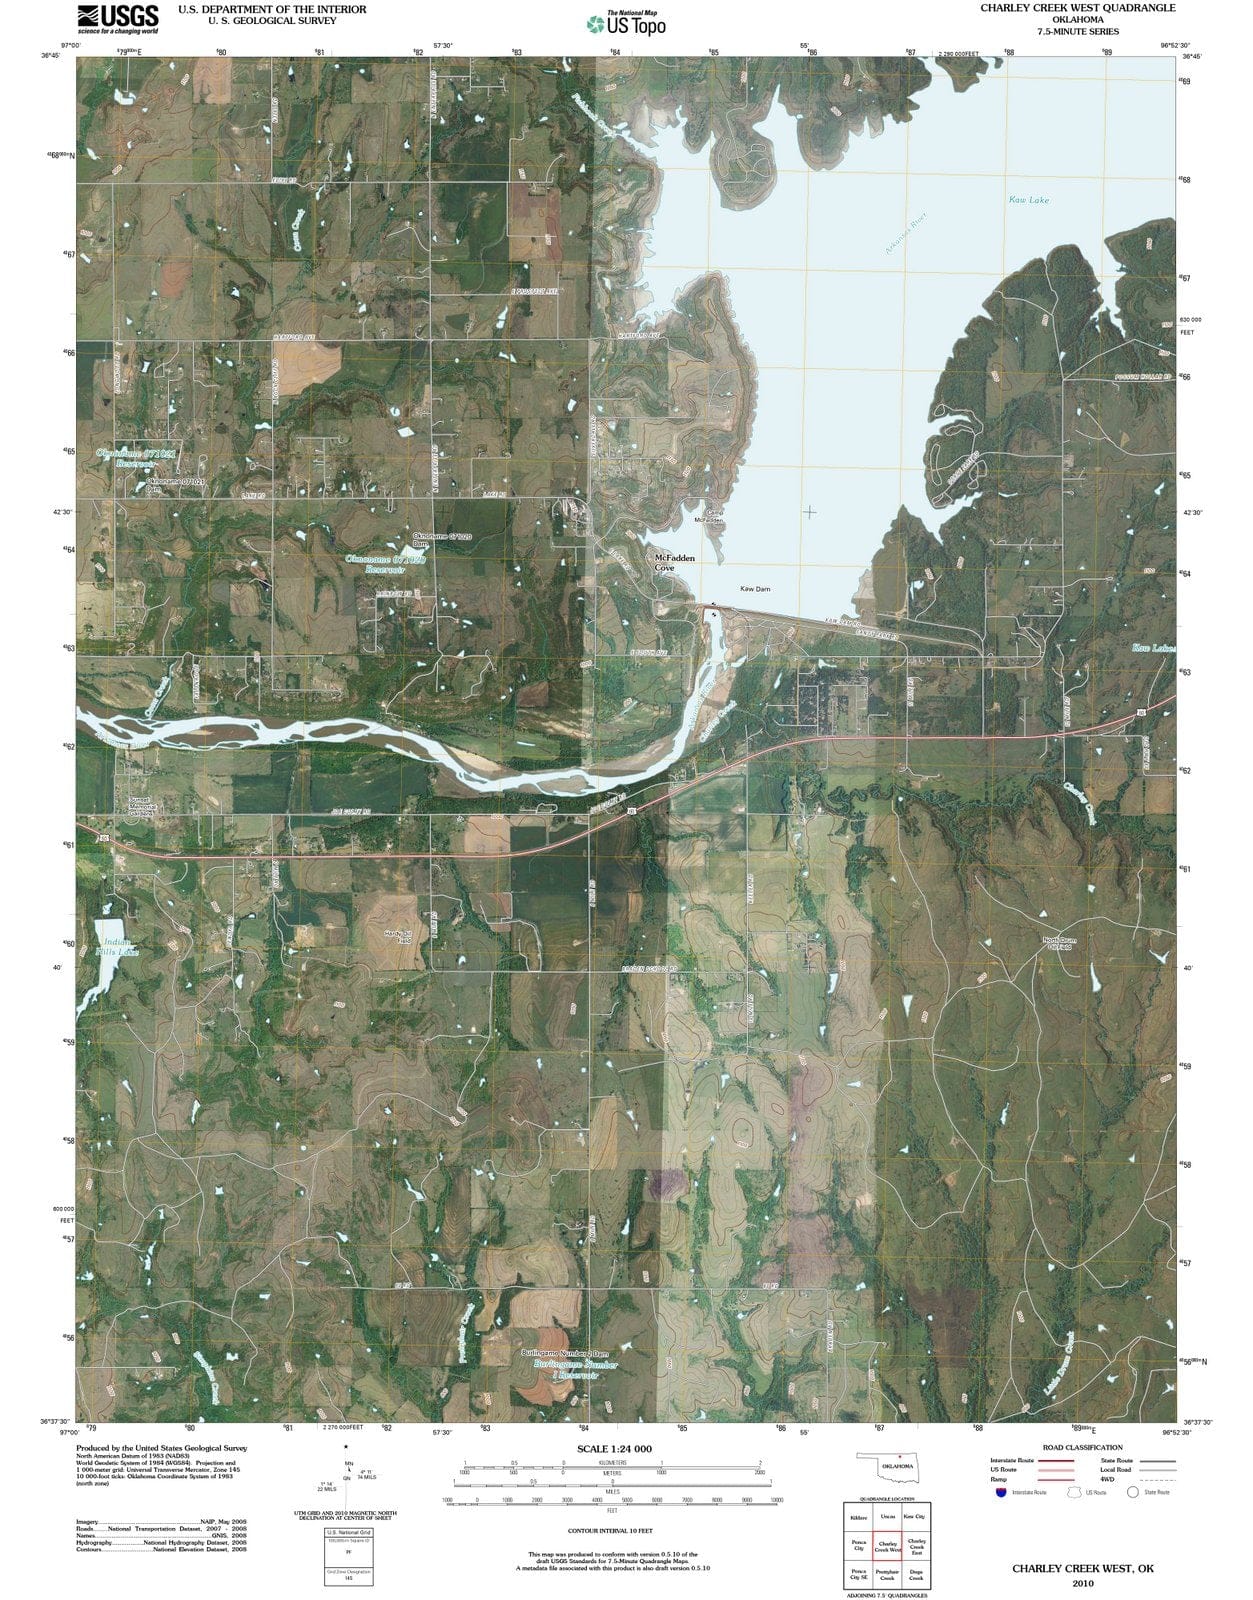 2010 Charley Creek West, OK - Oklahoma - USGS Topographic Map